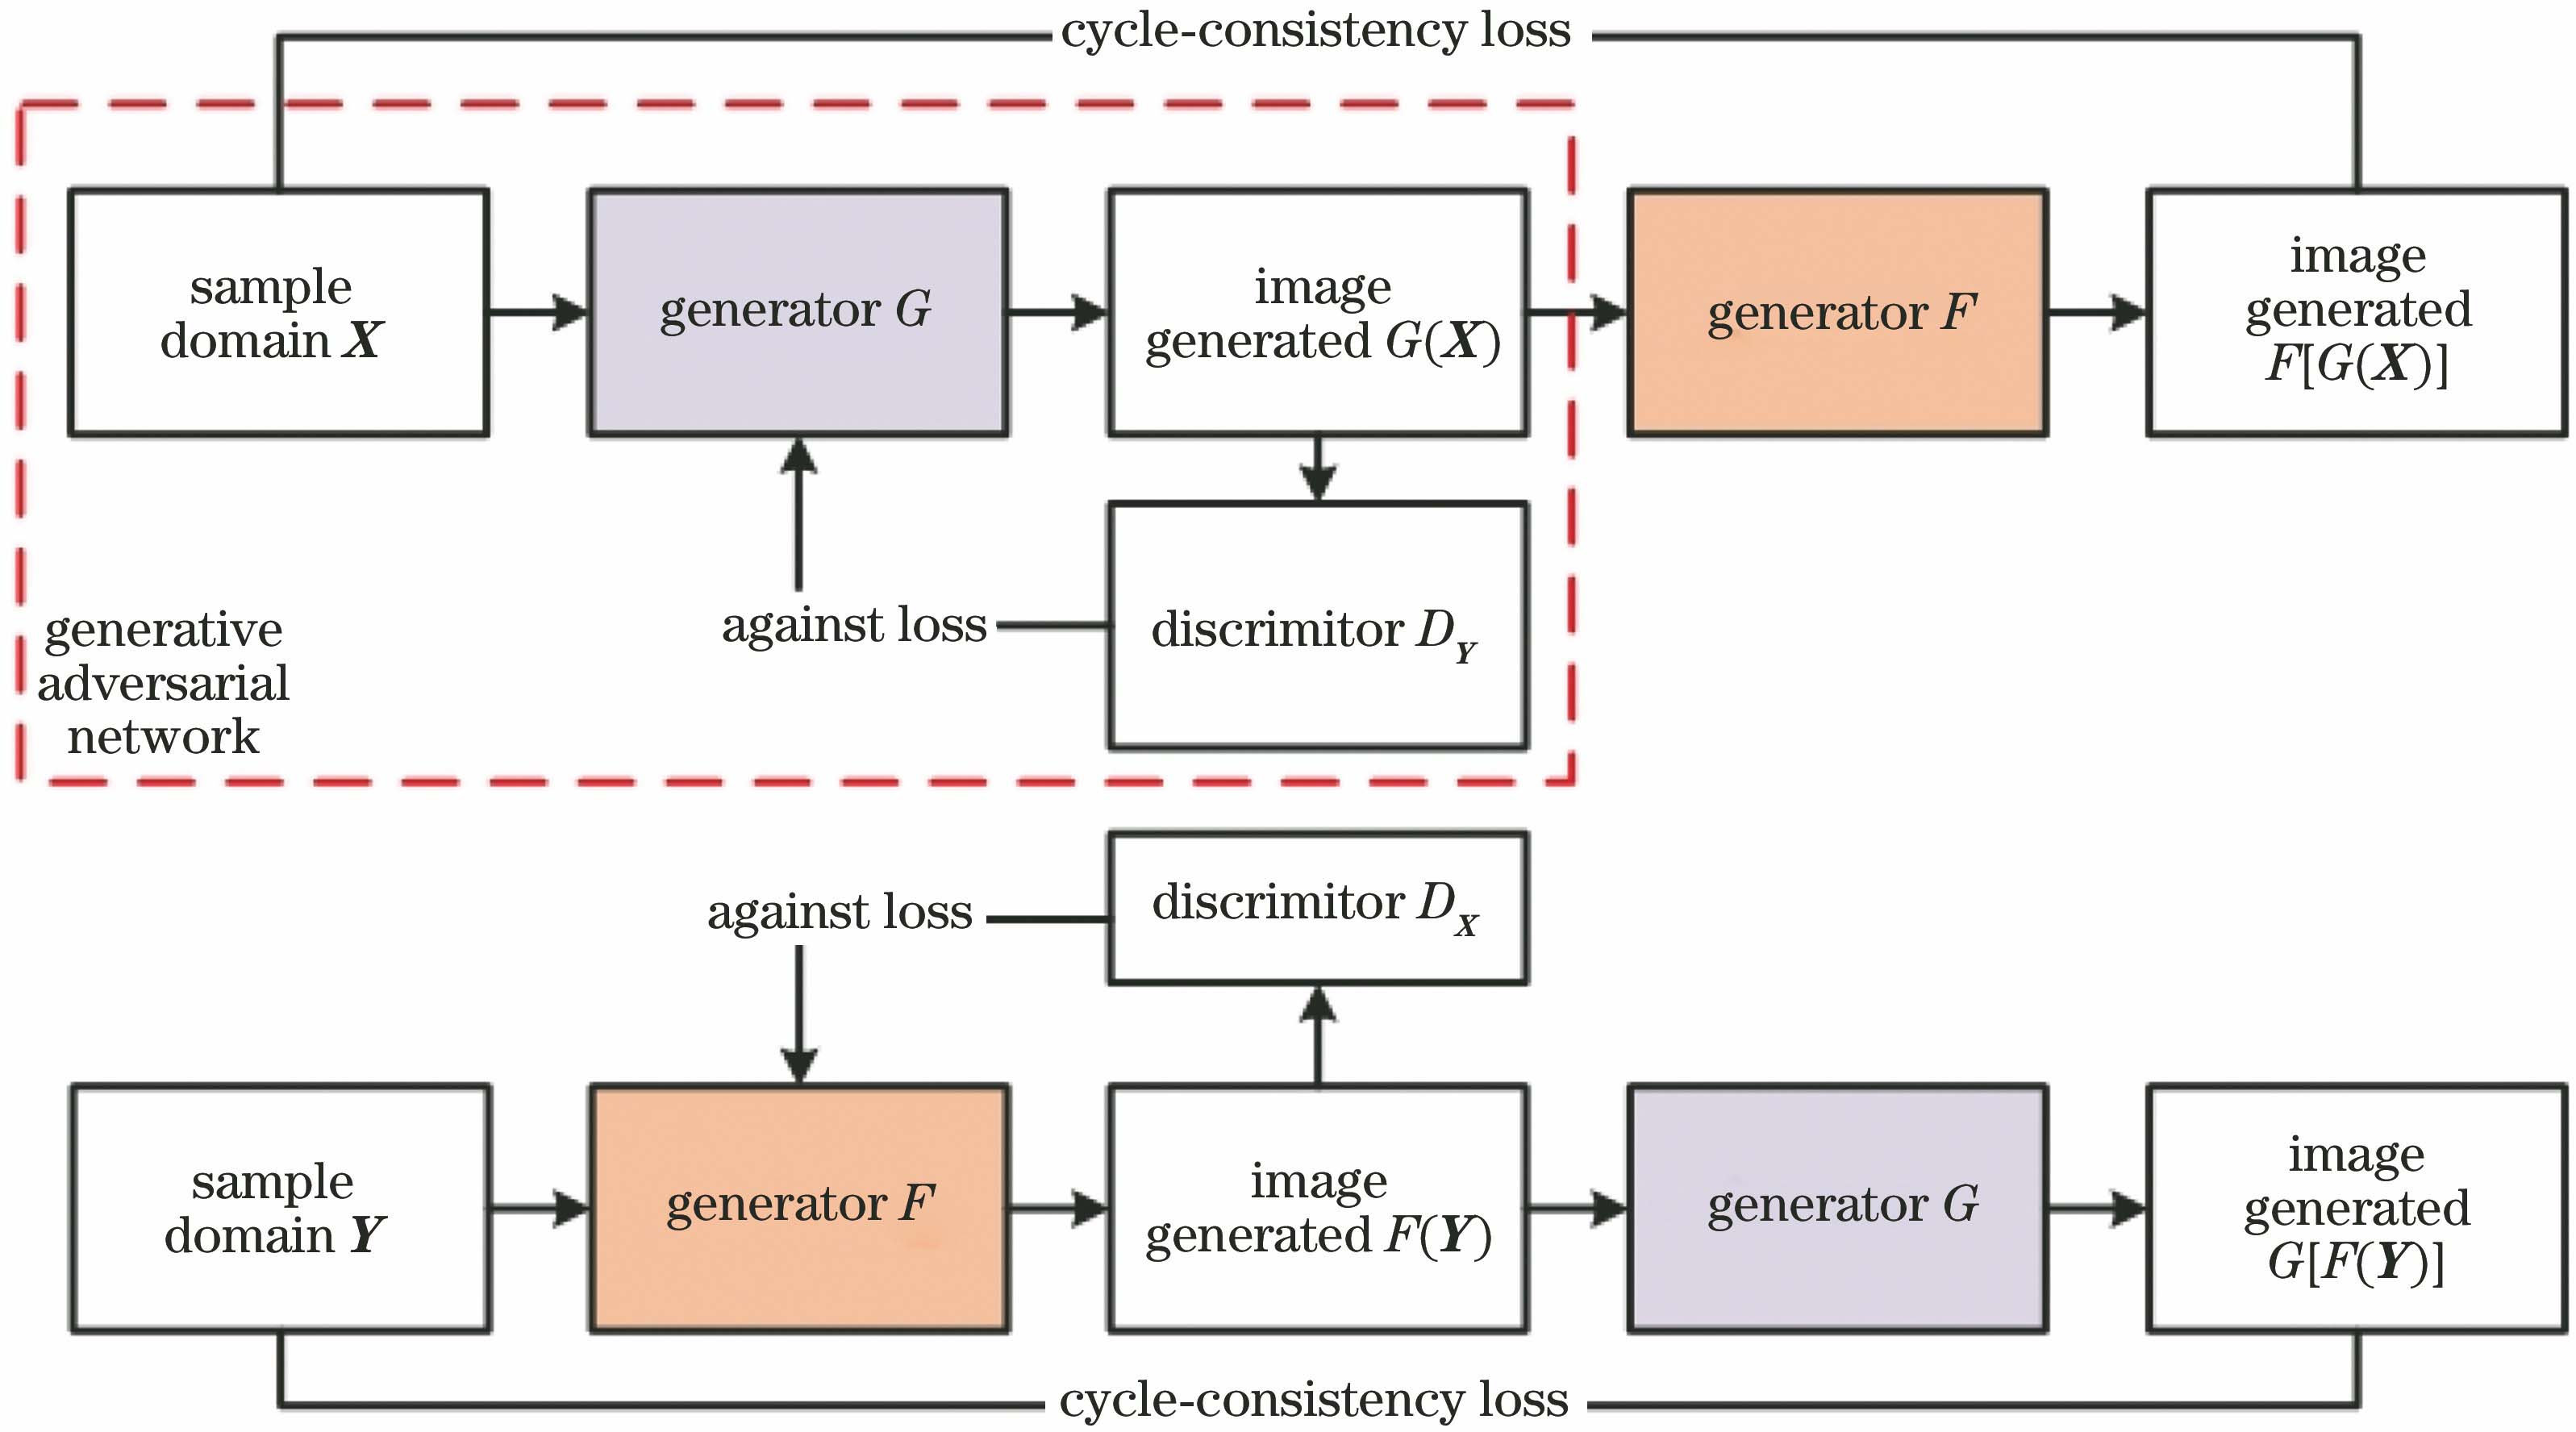 Cycle generative adversarial network model